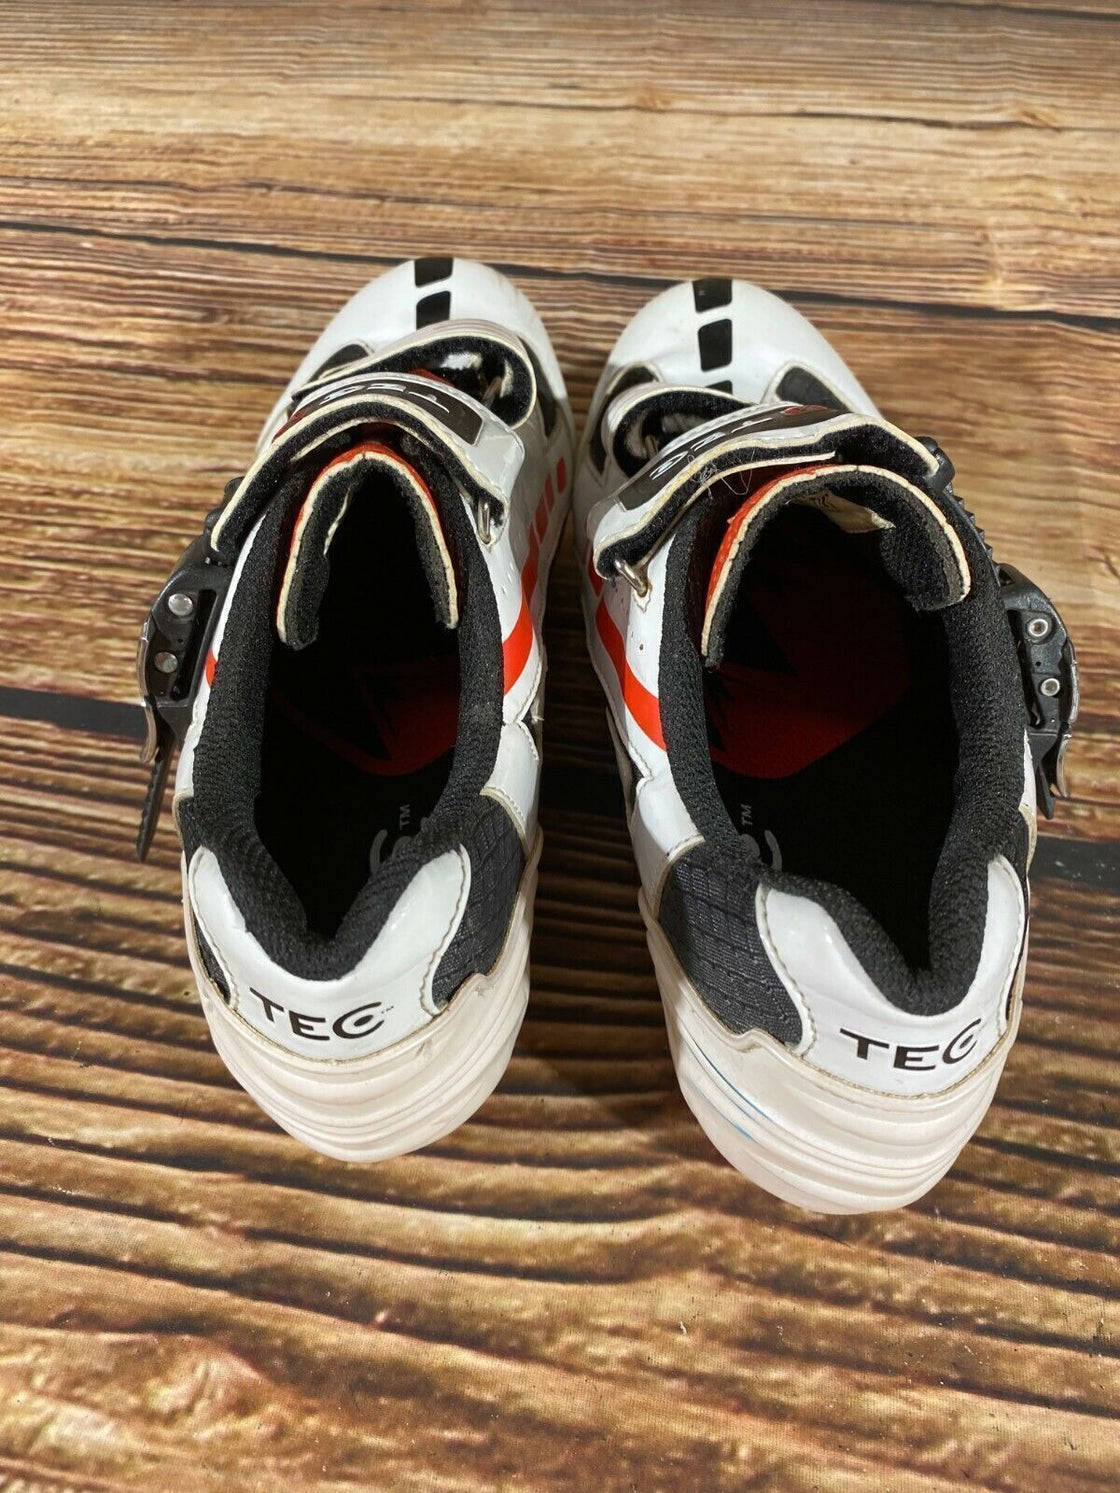 TEC VERRO Cycling MTB Shoes Mountain Biking Boots Size EU 39 with SPD Cleats